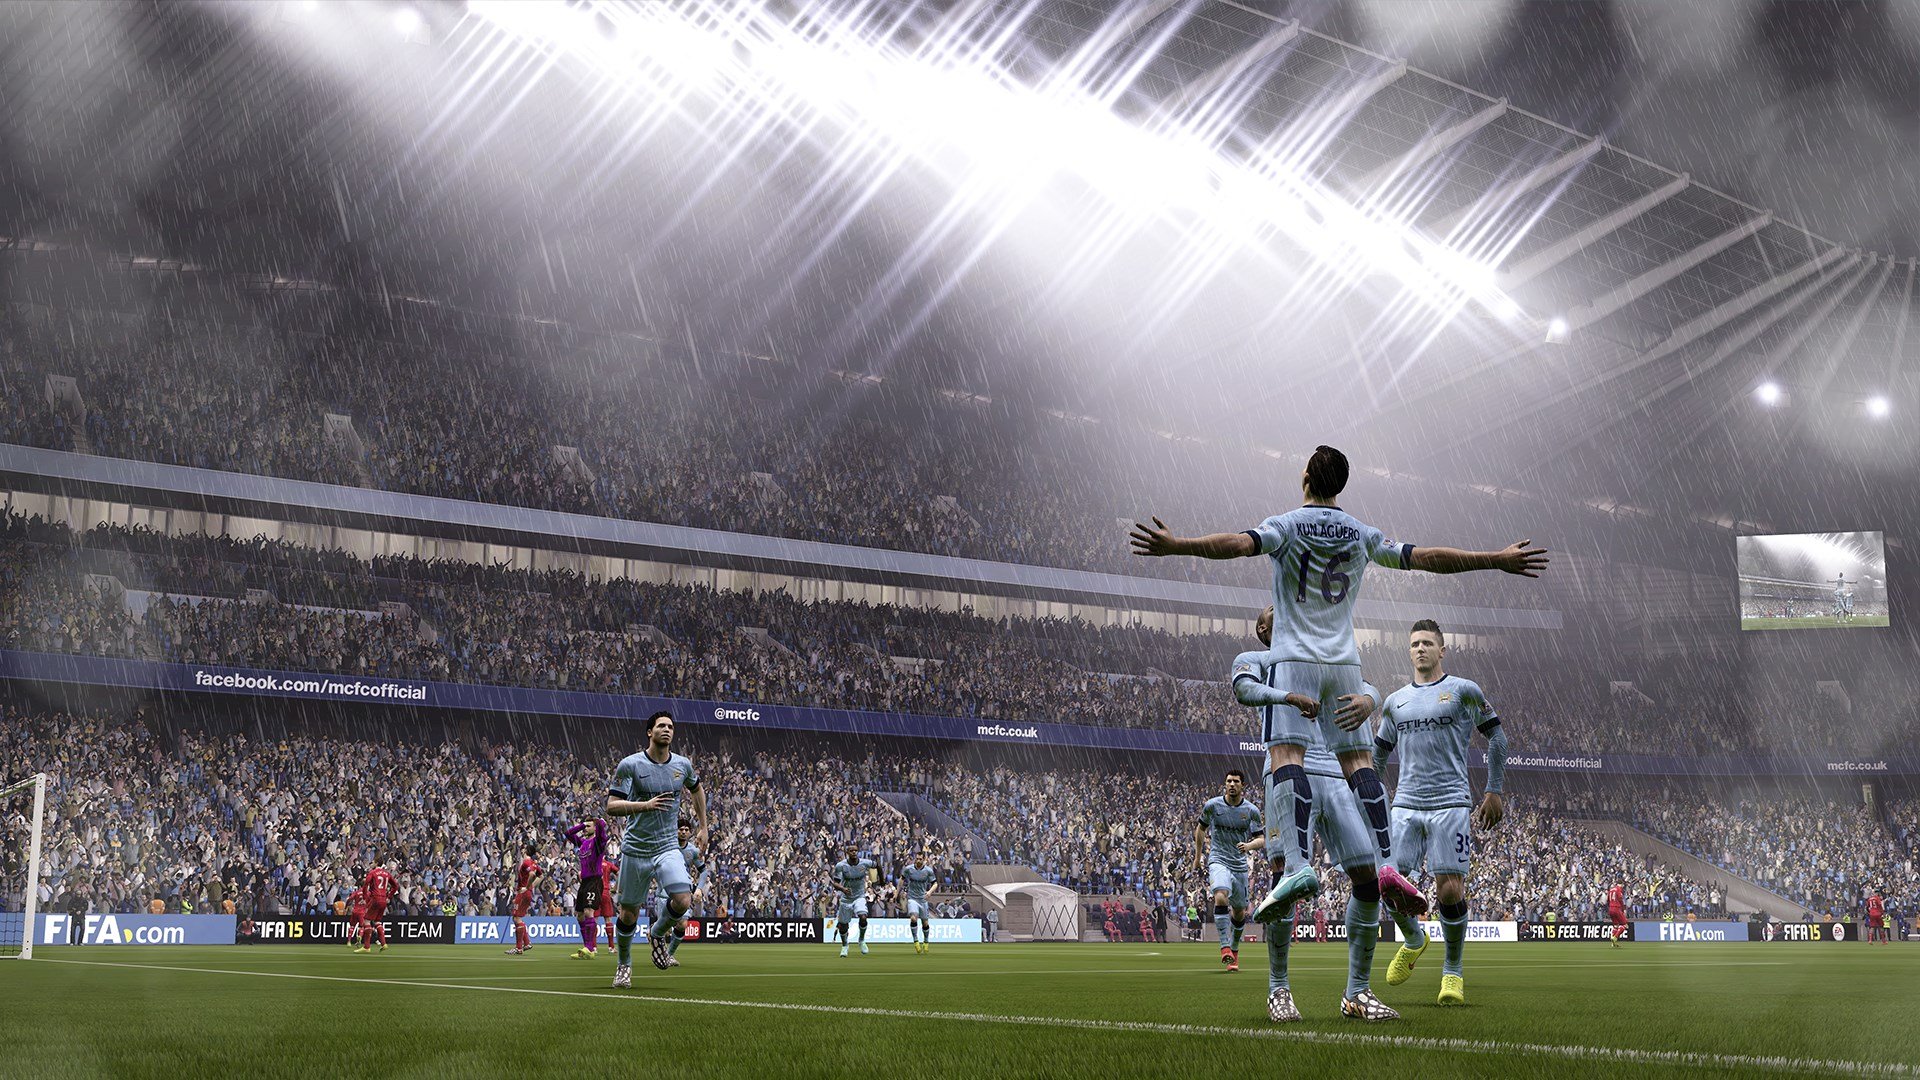 FIFA 15 cover image